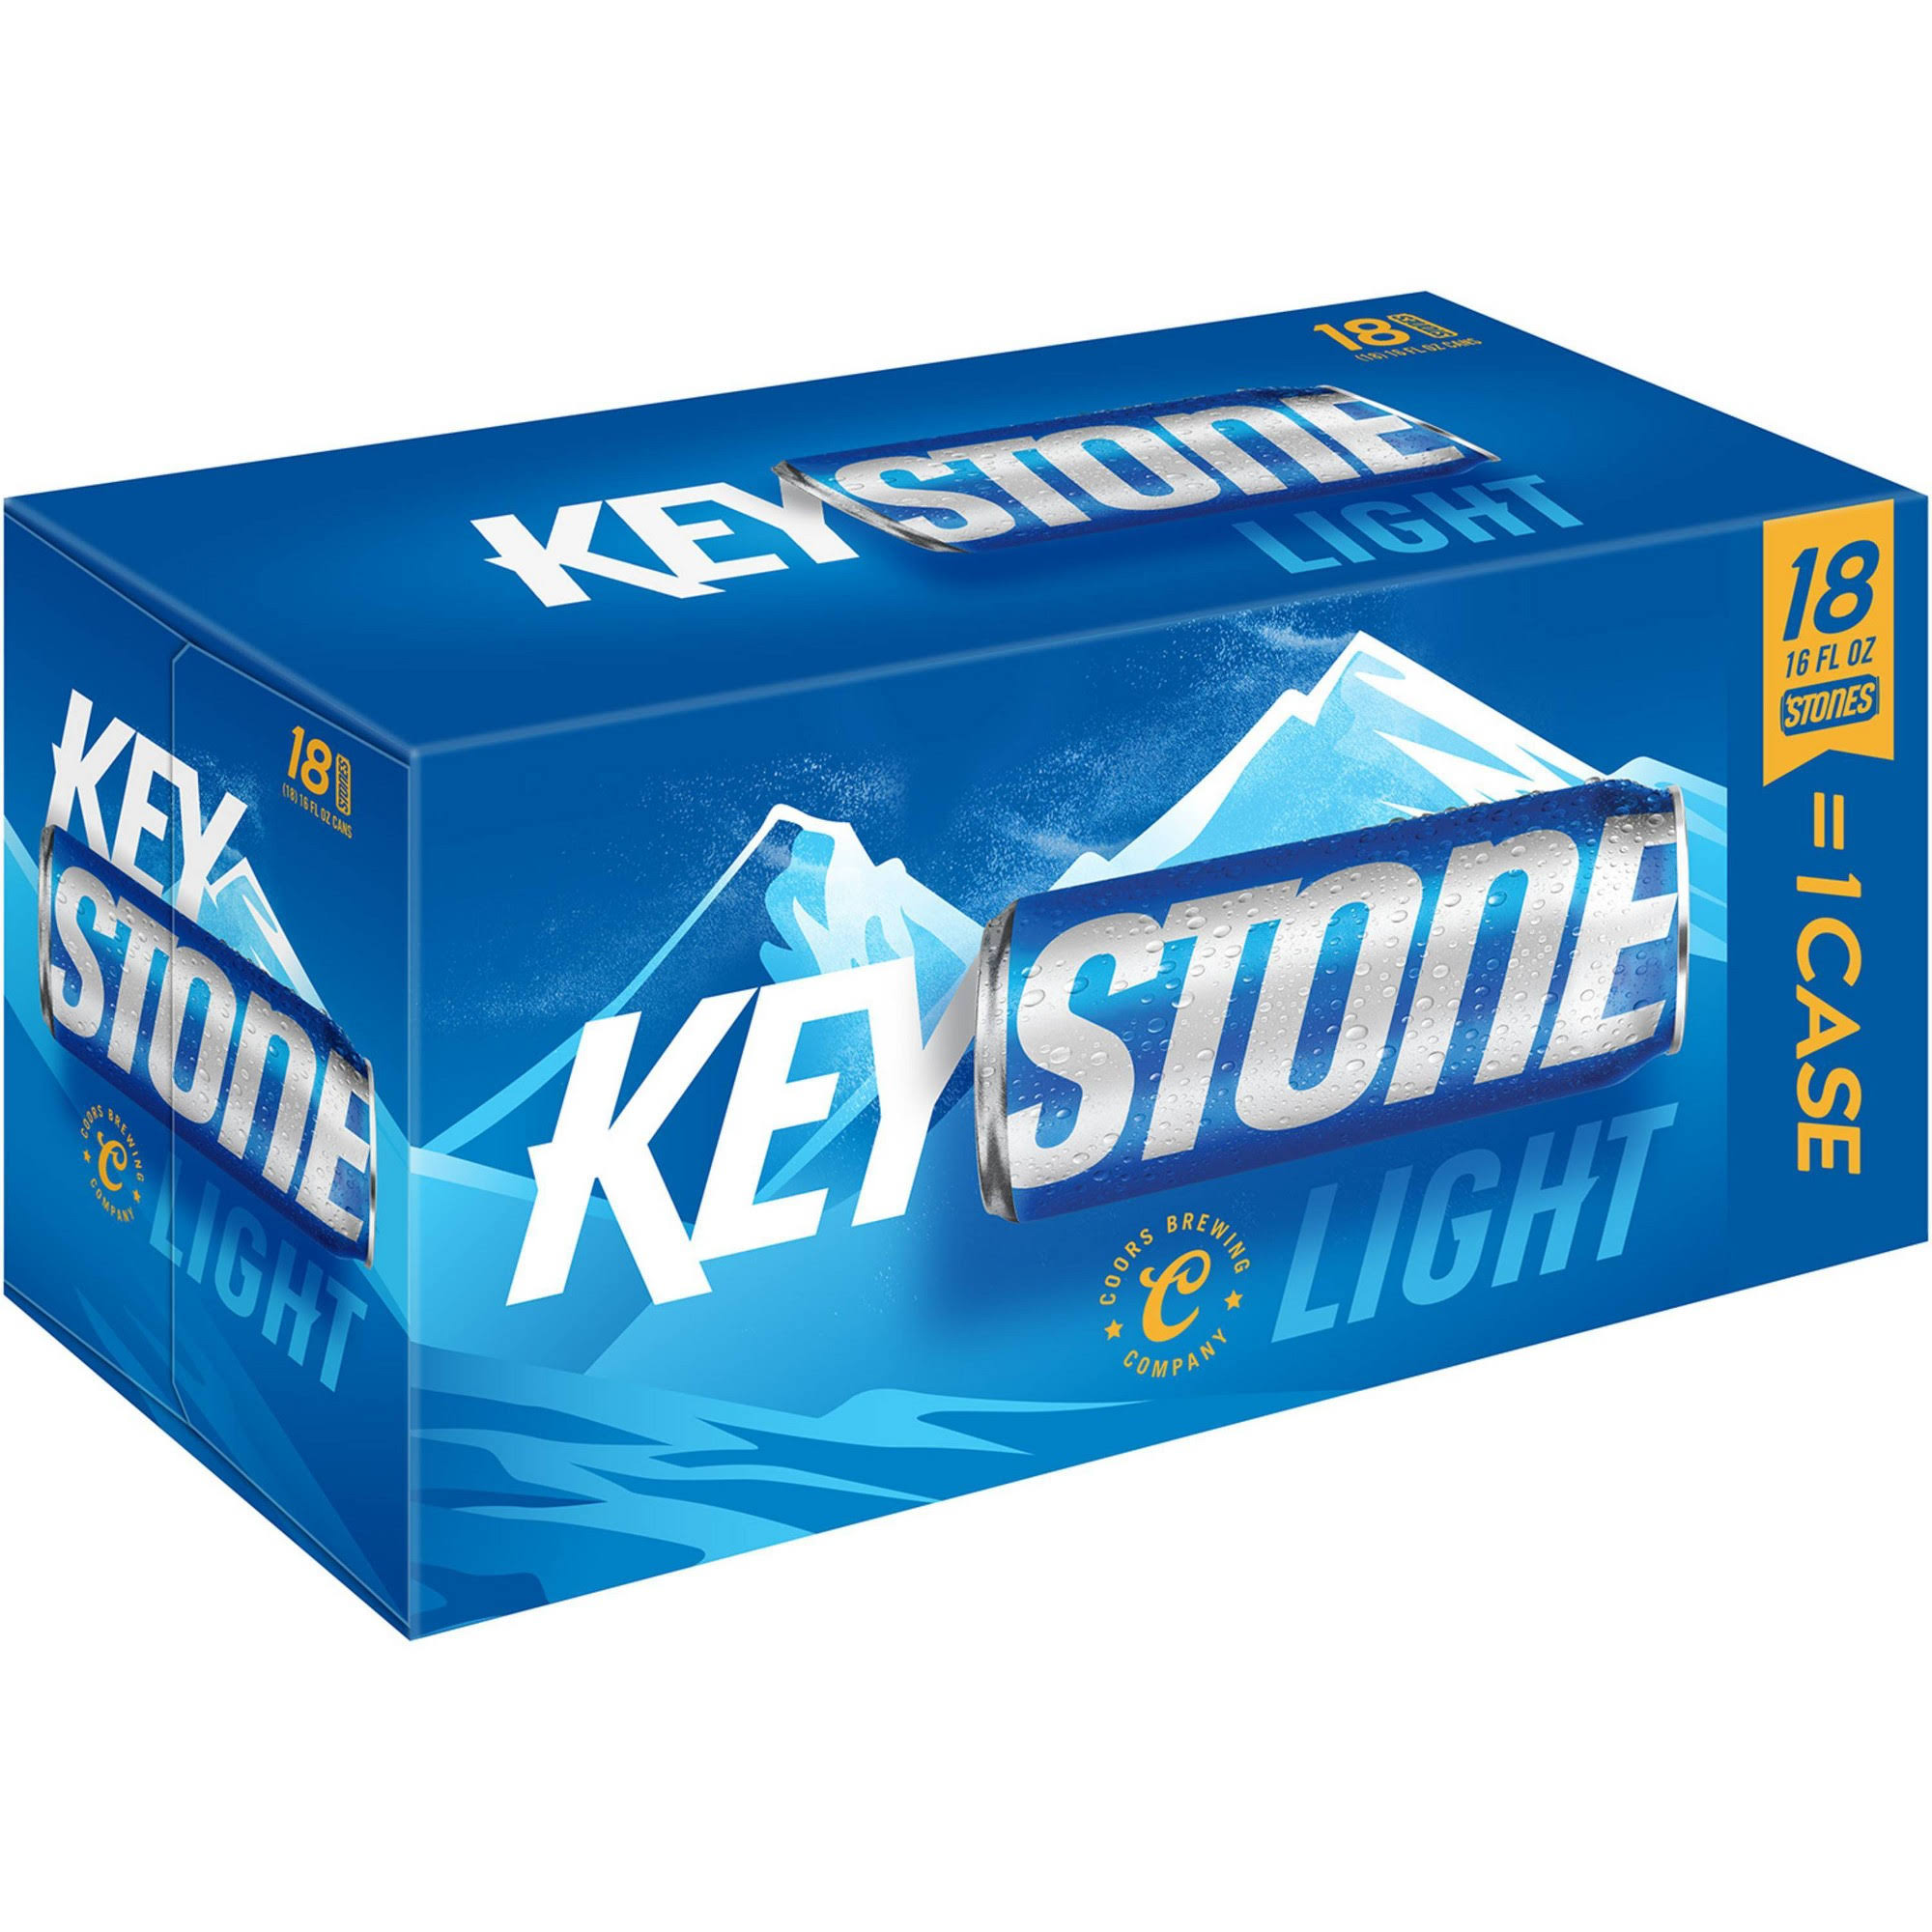 Keystone Light Beer - 18ct, 16oz